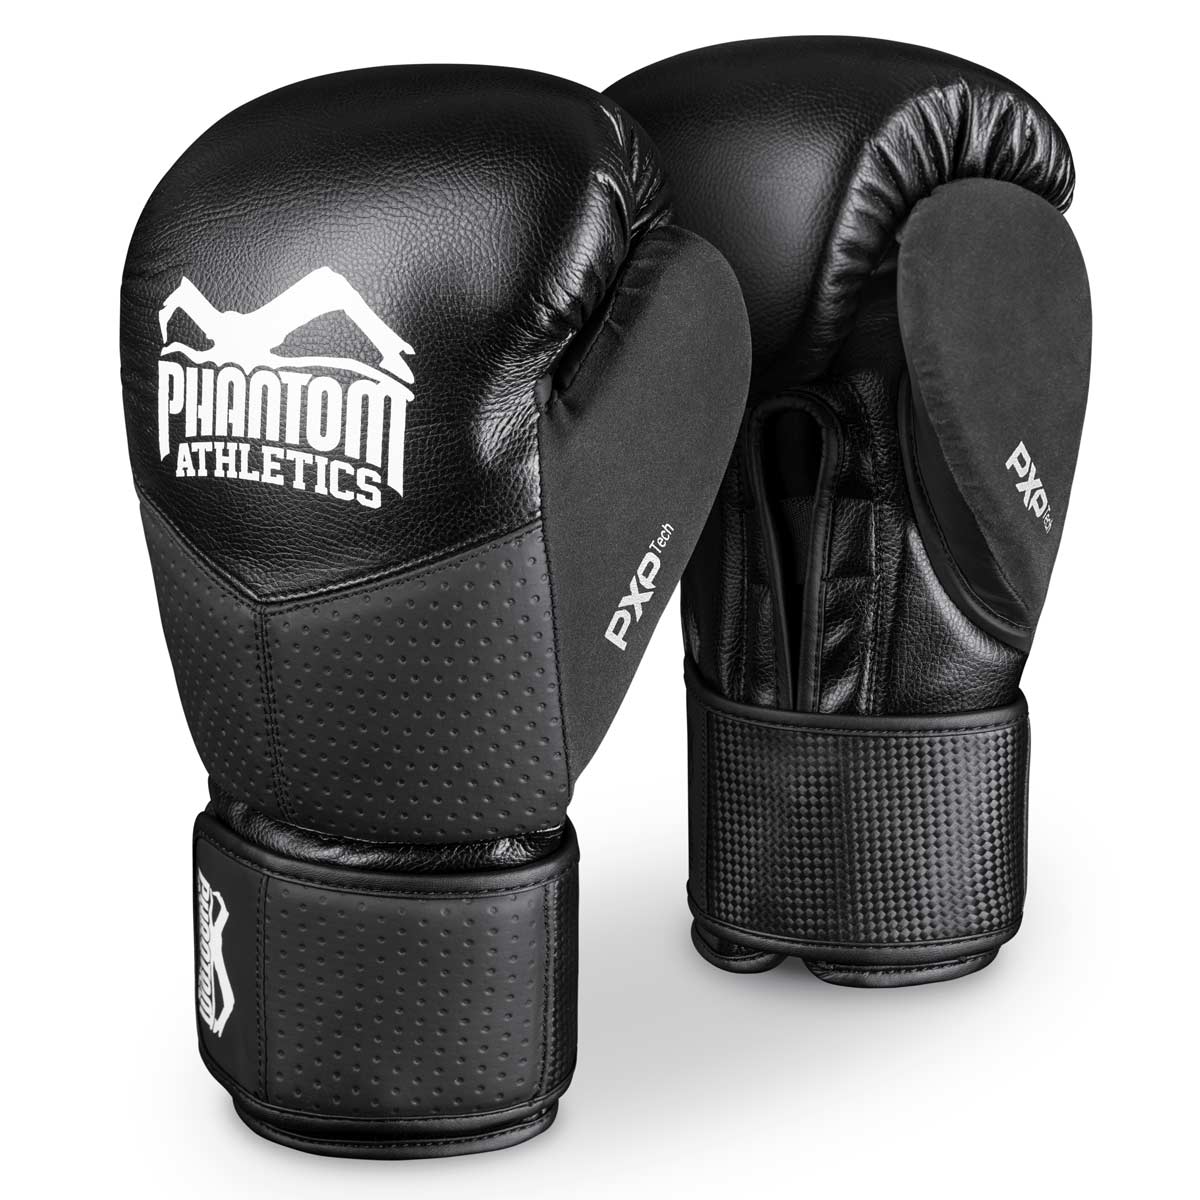 Buy boxing gloves for training & competition - PHANTOM ATHLETICS